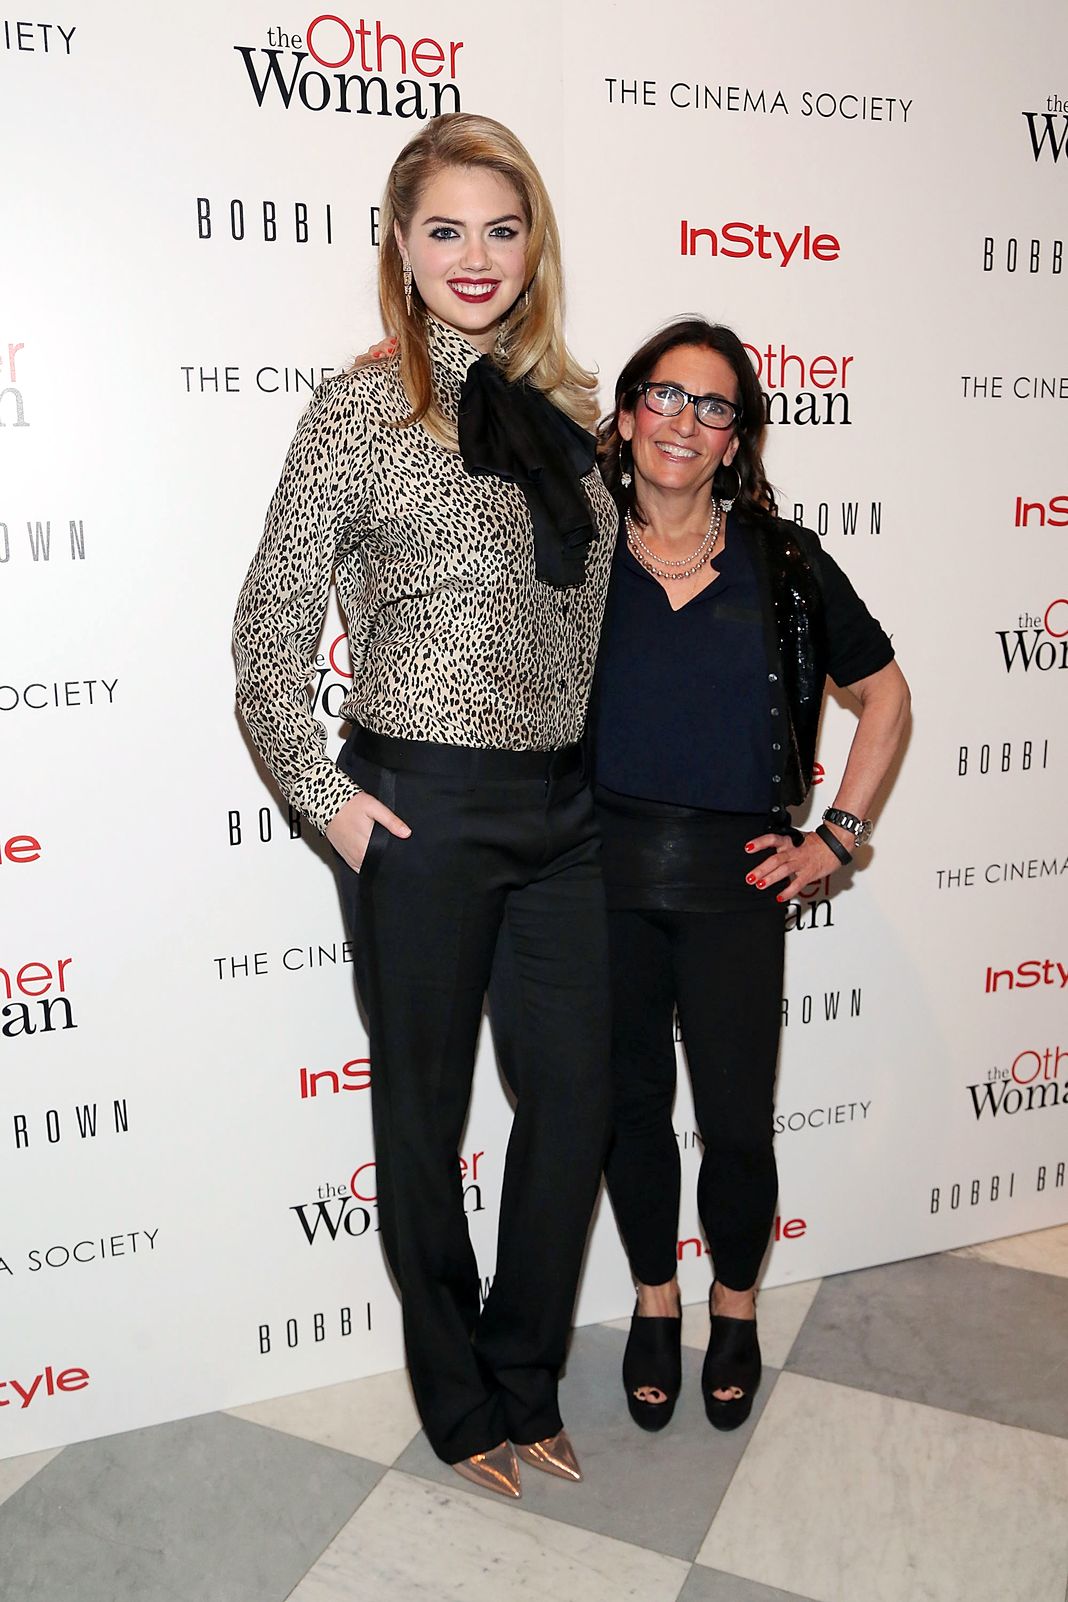 Актриса / модель Кейт Аптон и визажист Бобби Браун на показе InStyle «Другая женщина».